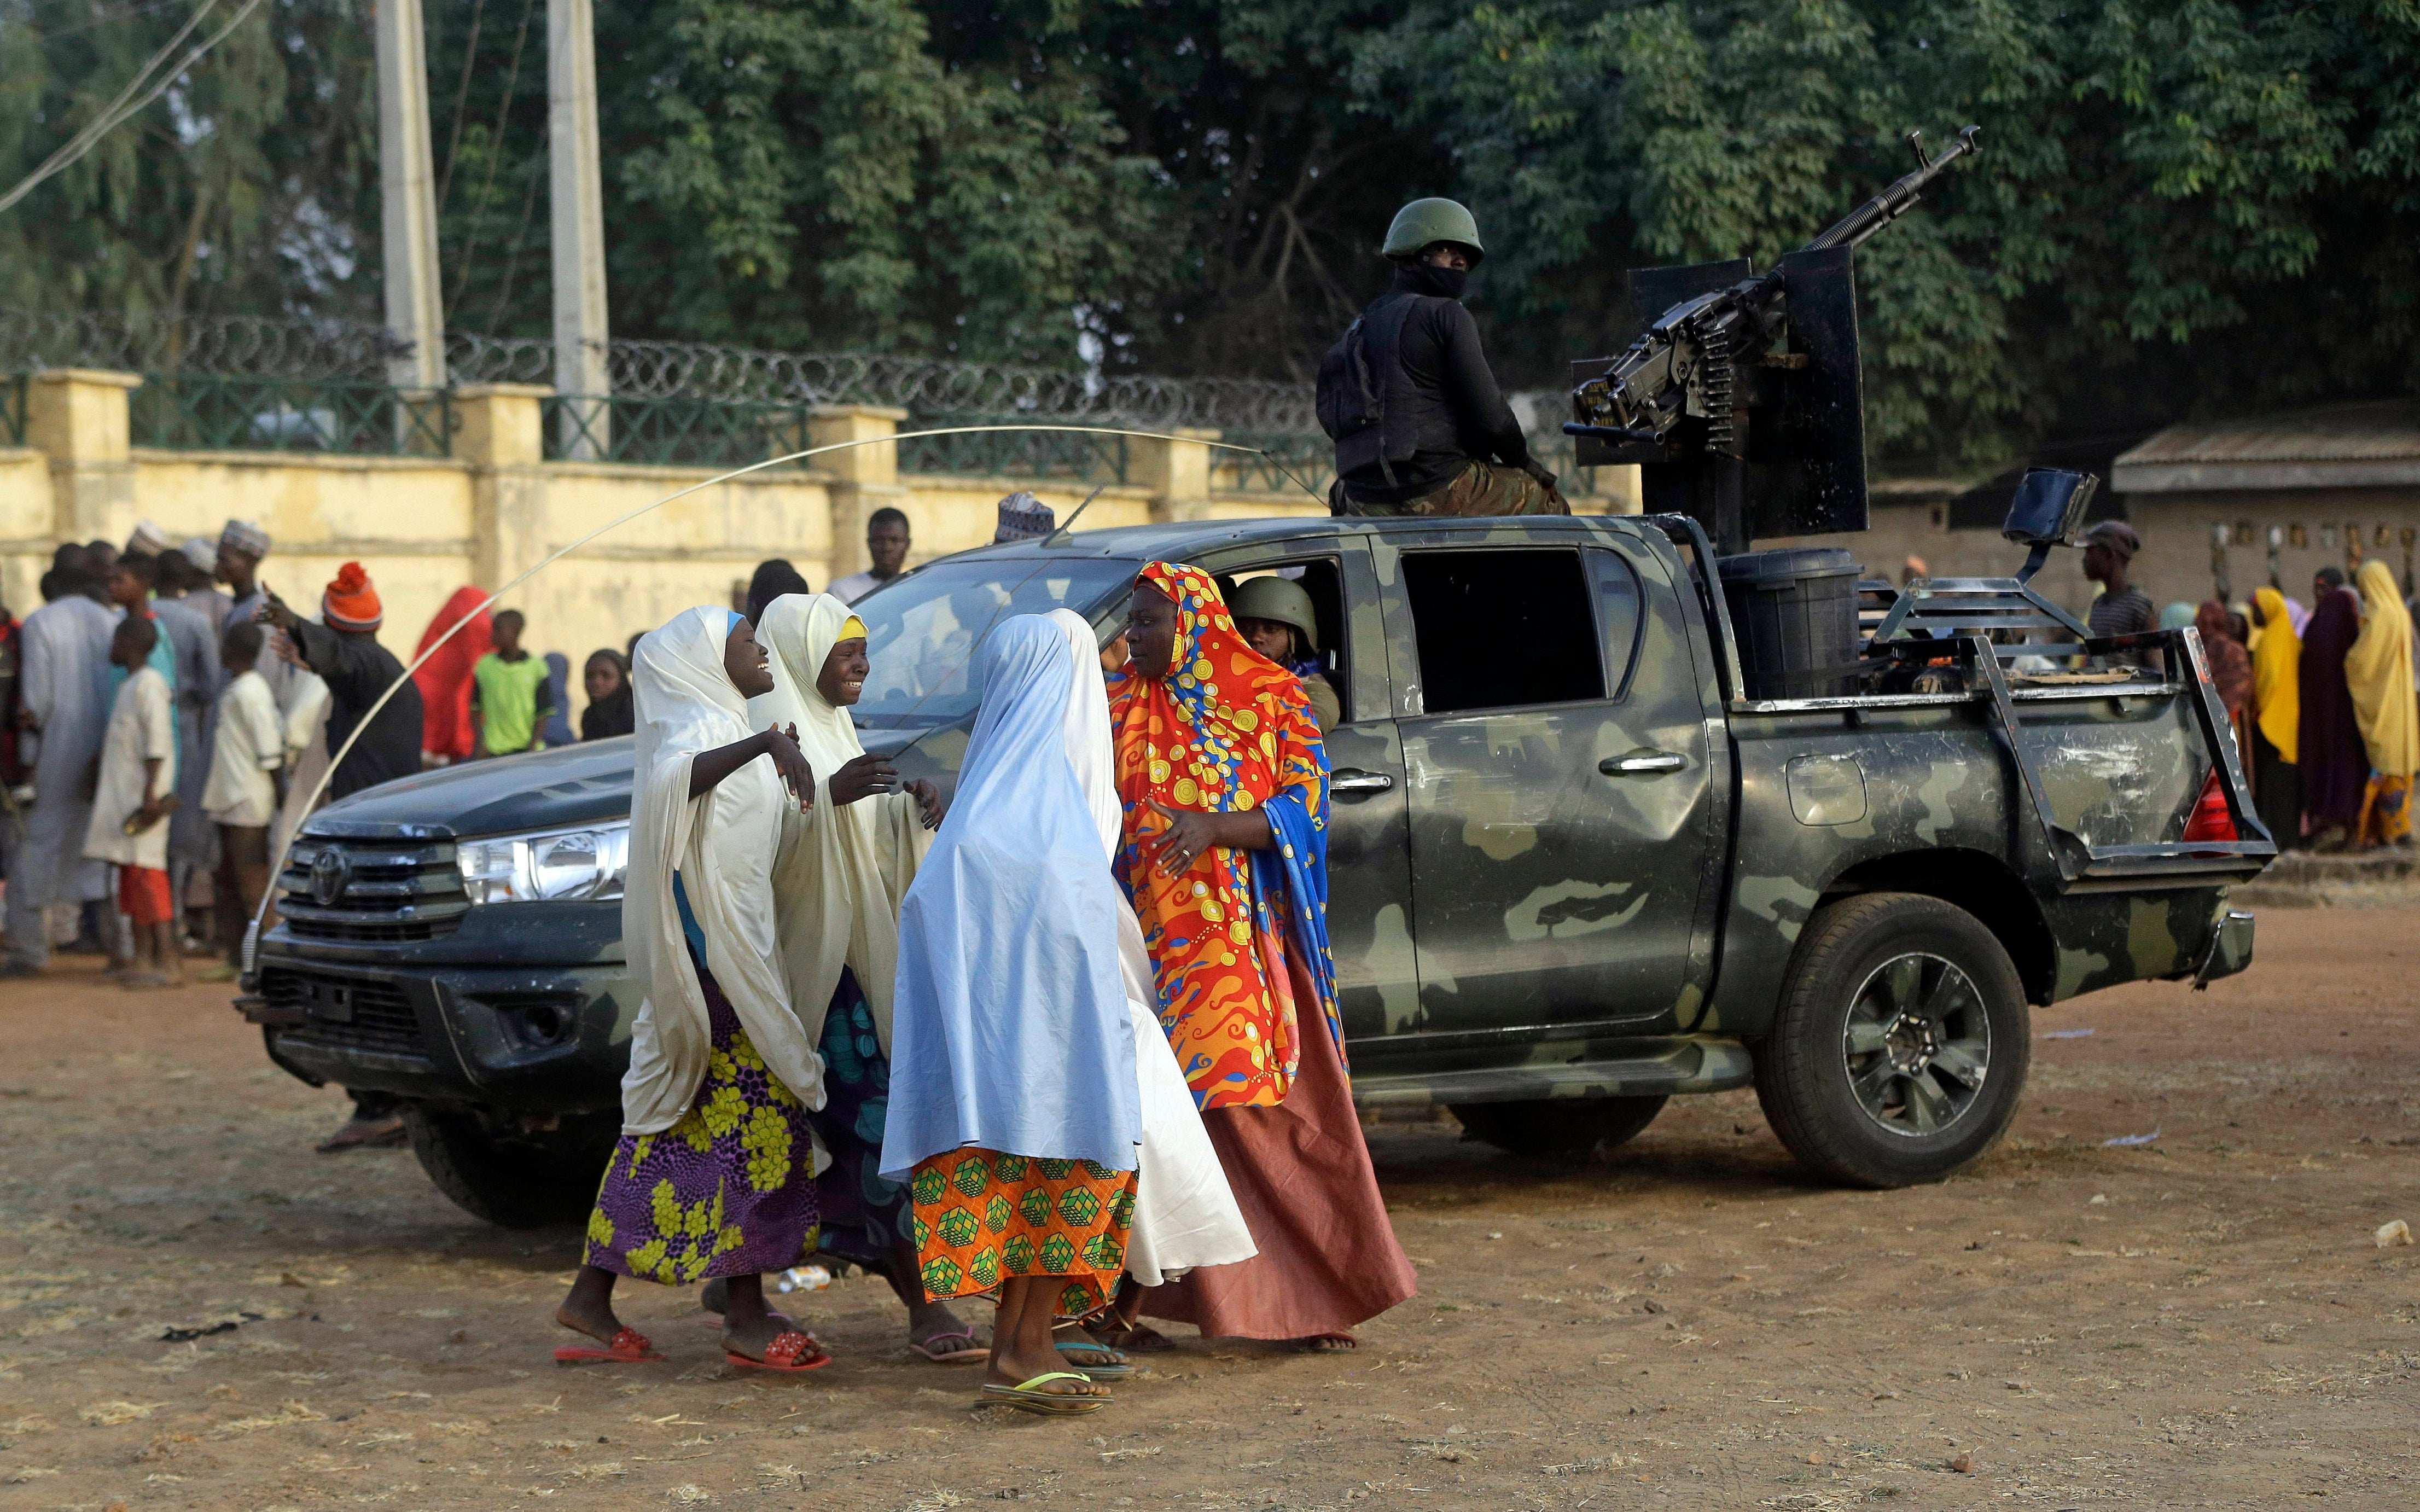 APTOPIX Nigeria Kidnapped School Girls Freed